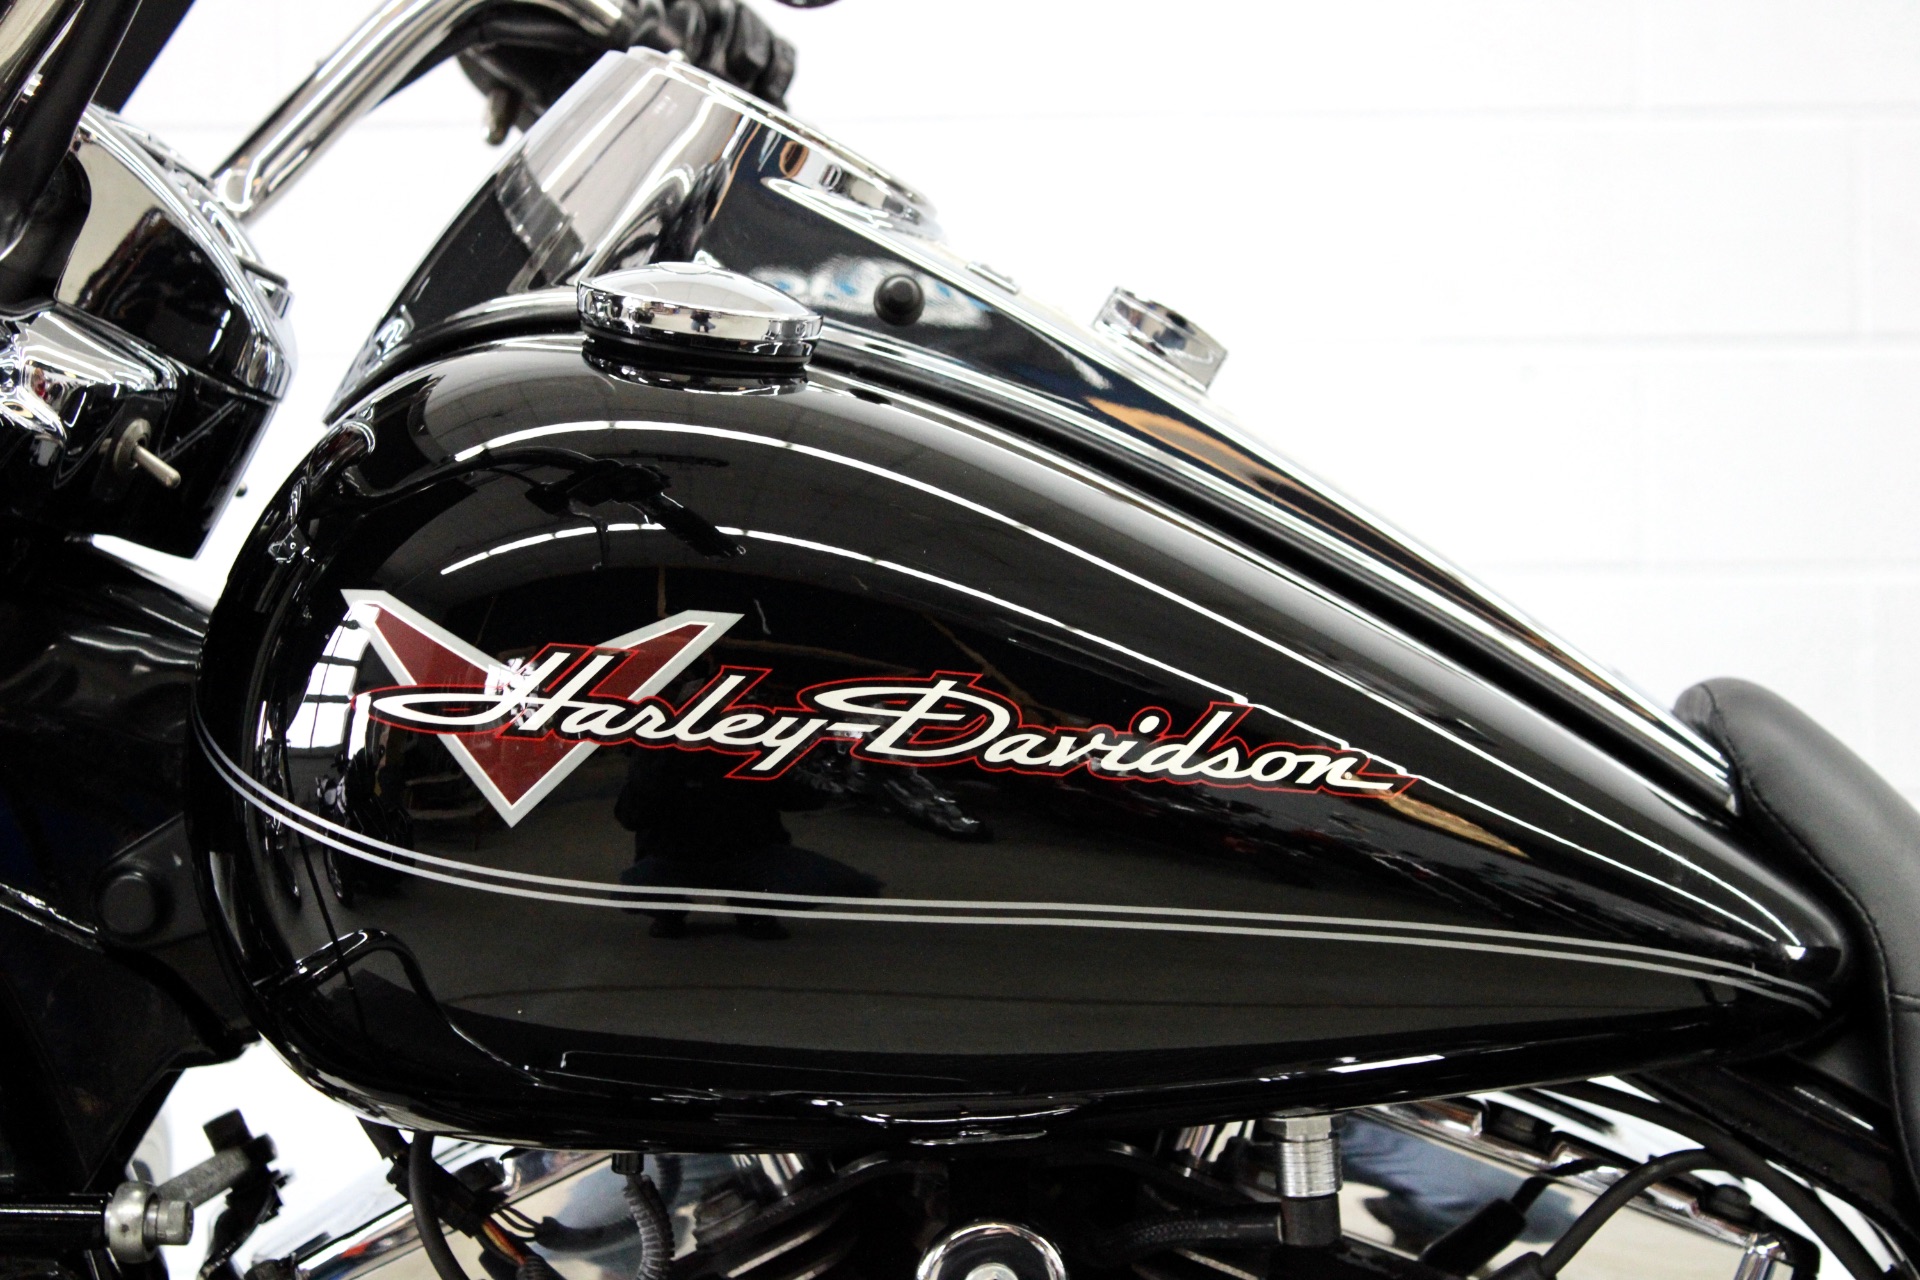 2011 Harley-Davidson Road King® in Fredericksburg, Virginia - Photo 18